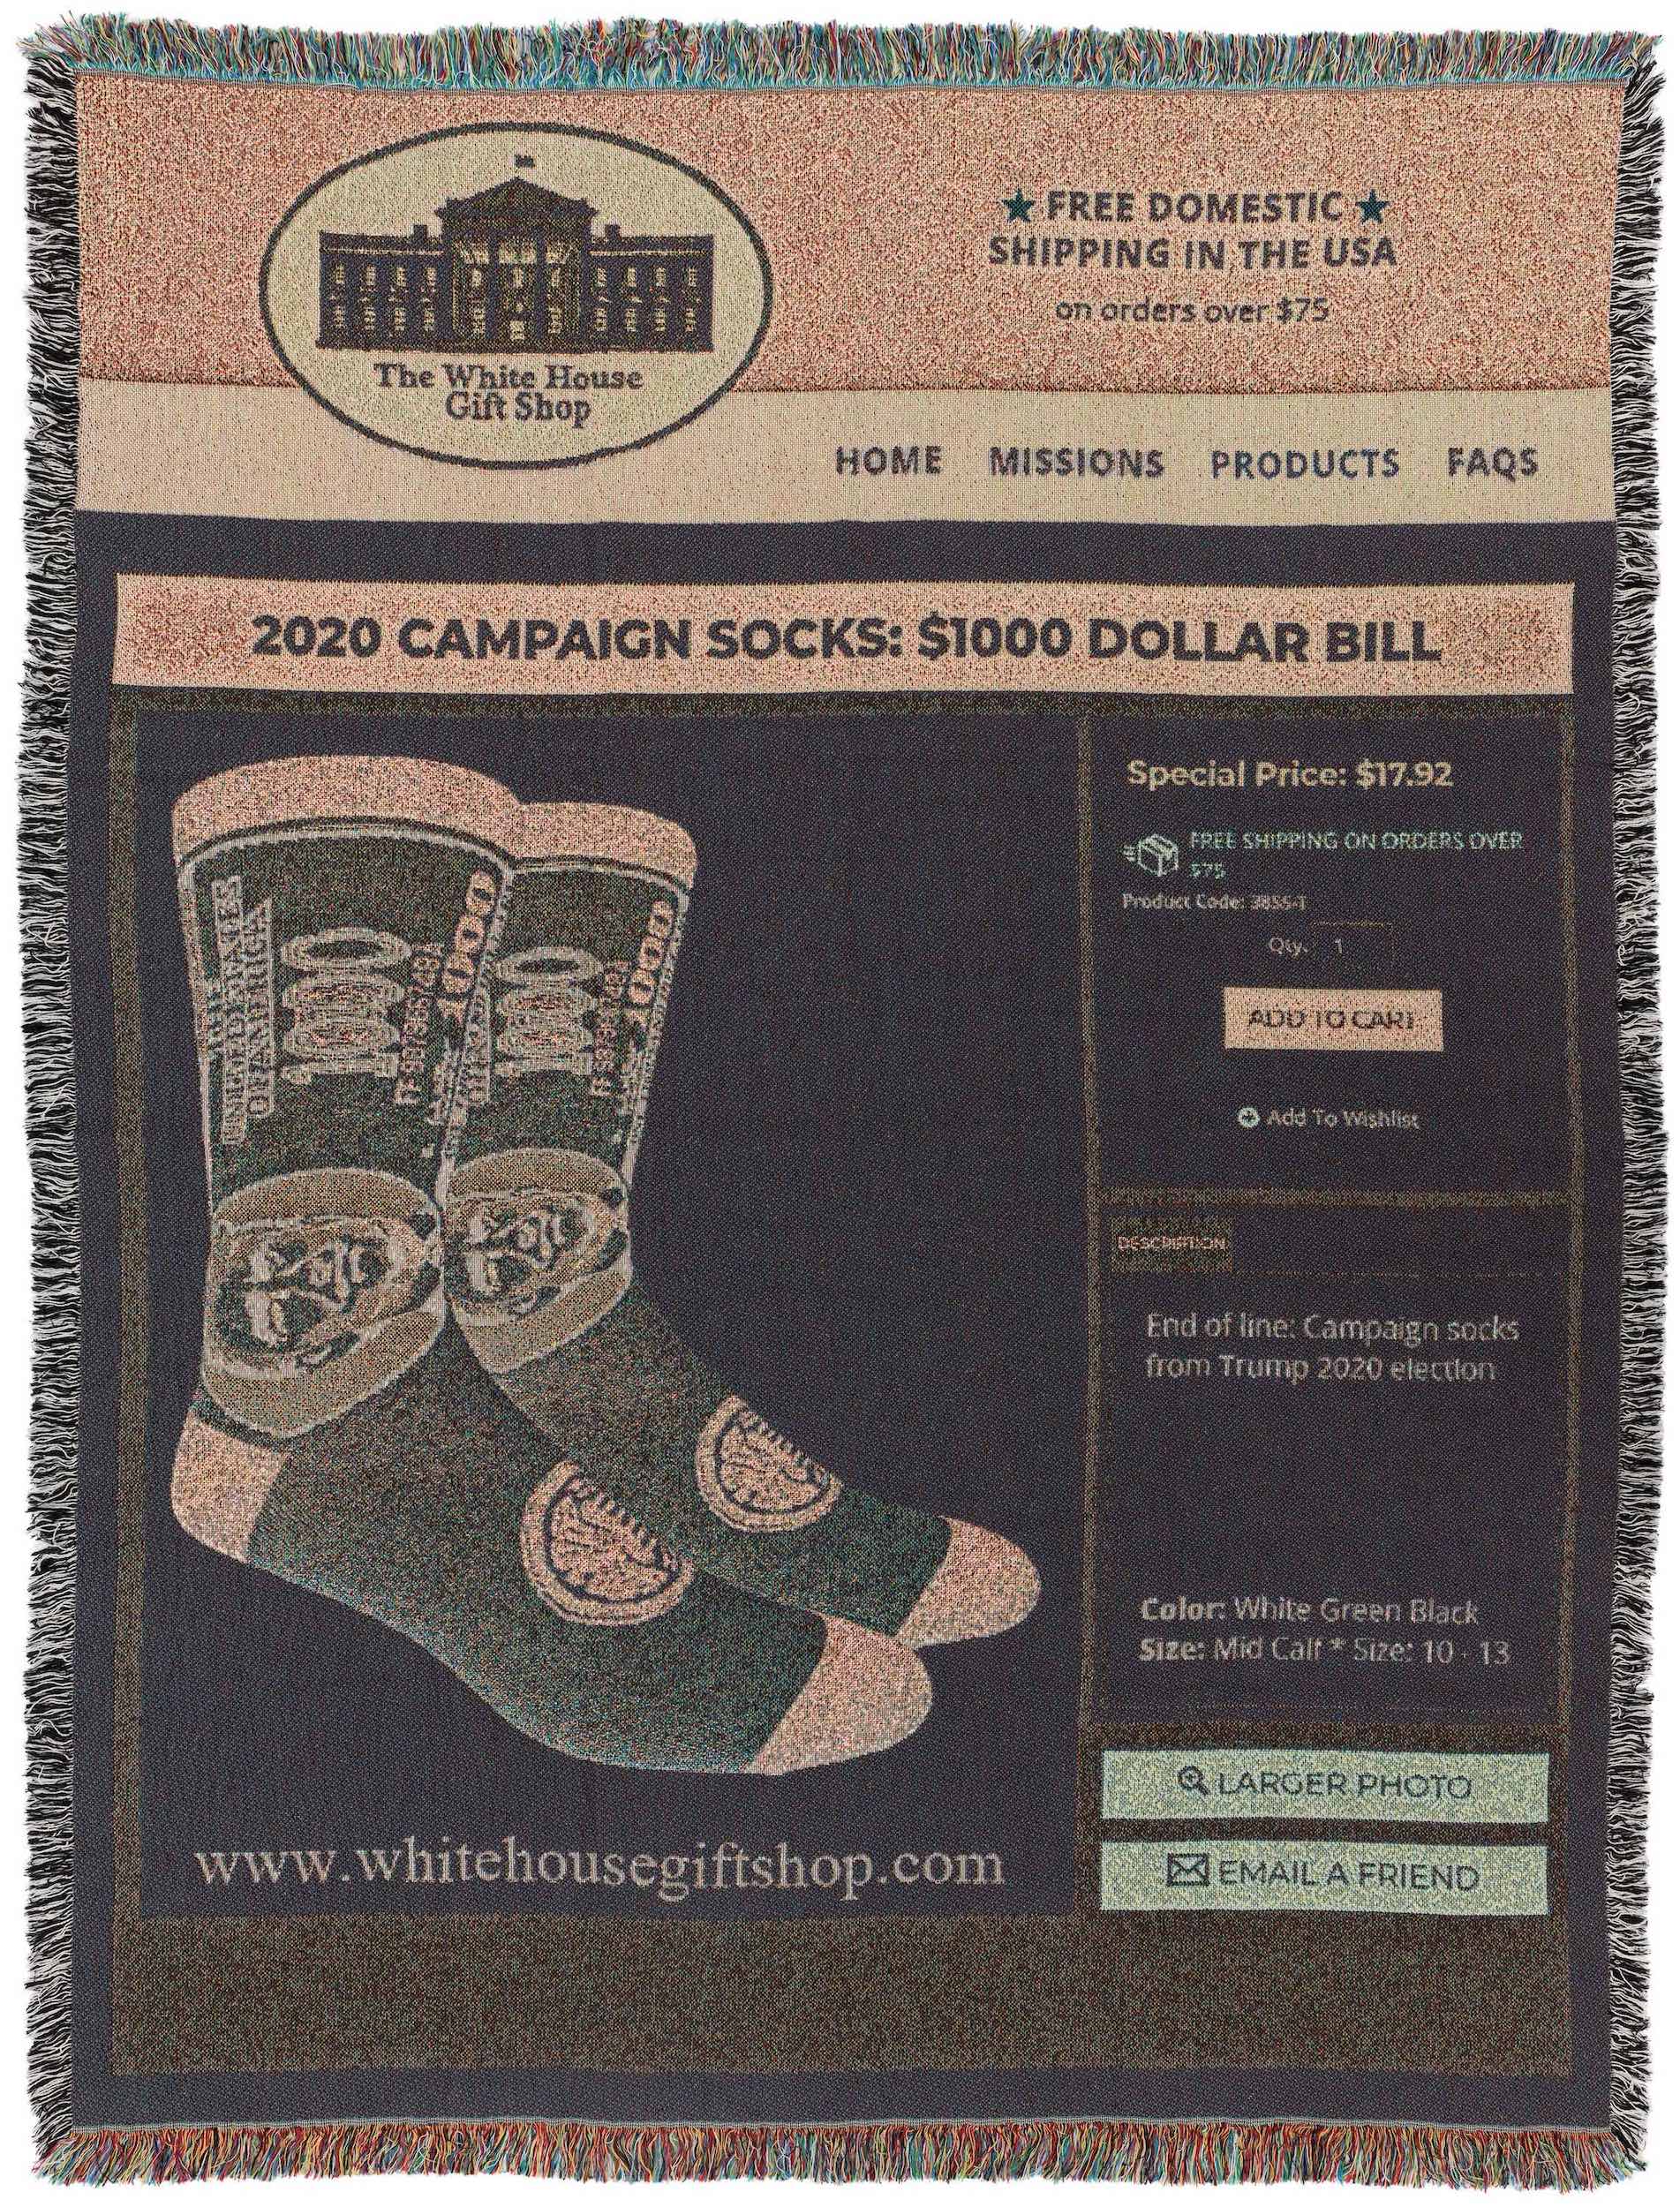 《WHGS》
Simon Denny WHGS Meta Throw Blanket – Socks 2021
png, Non-fungible token ERC-721 custom jacquard-woven throw blanket: 200 × 150 cm
Link Voice: https://www.voice.com/creation/100000000019816